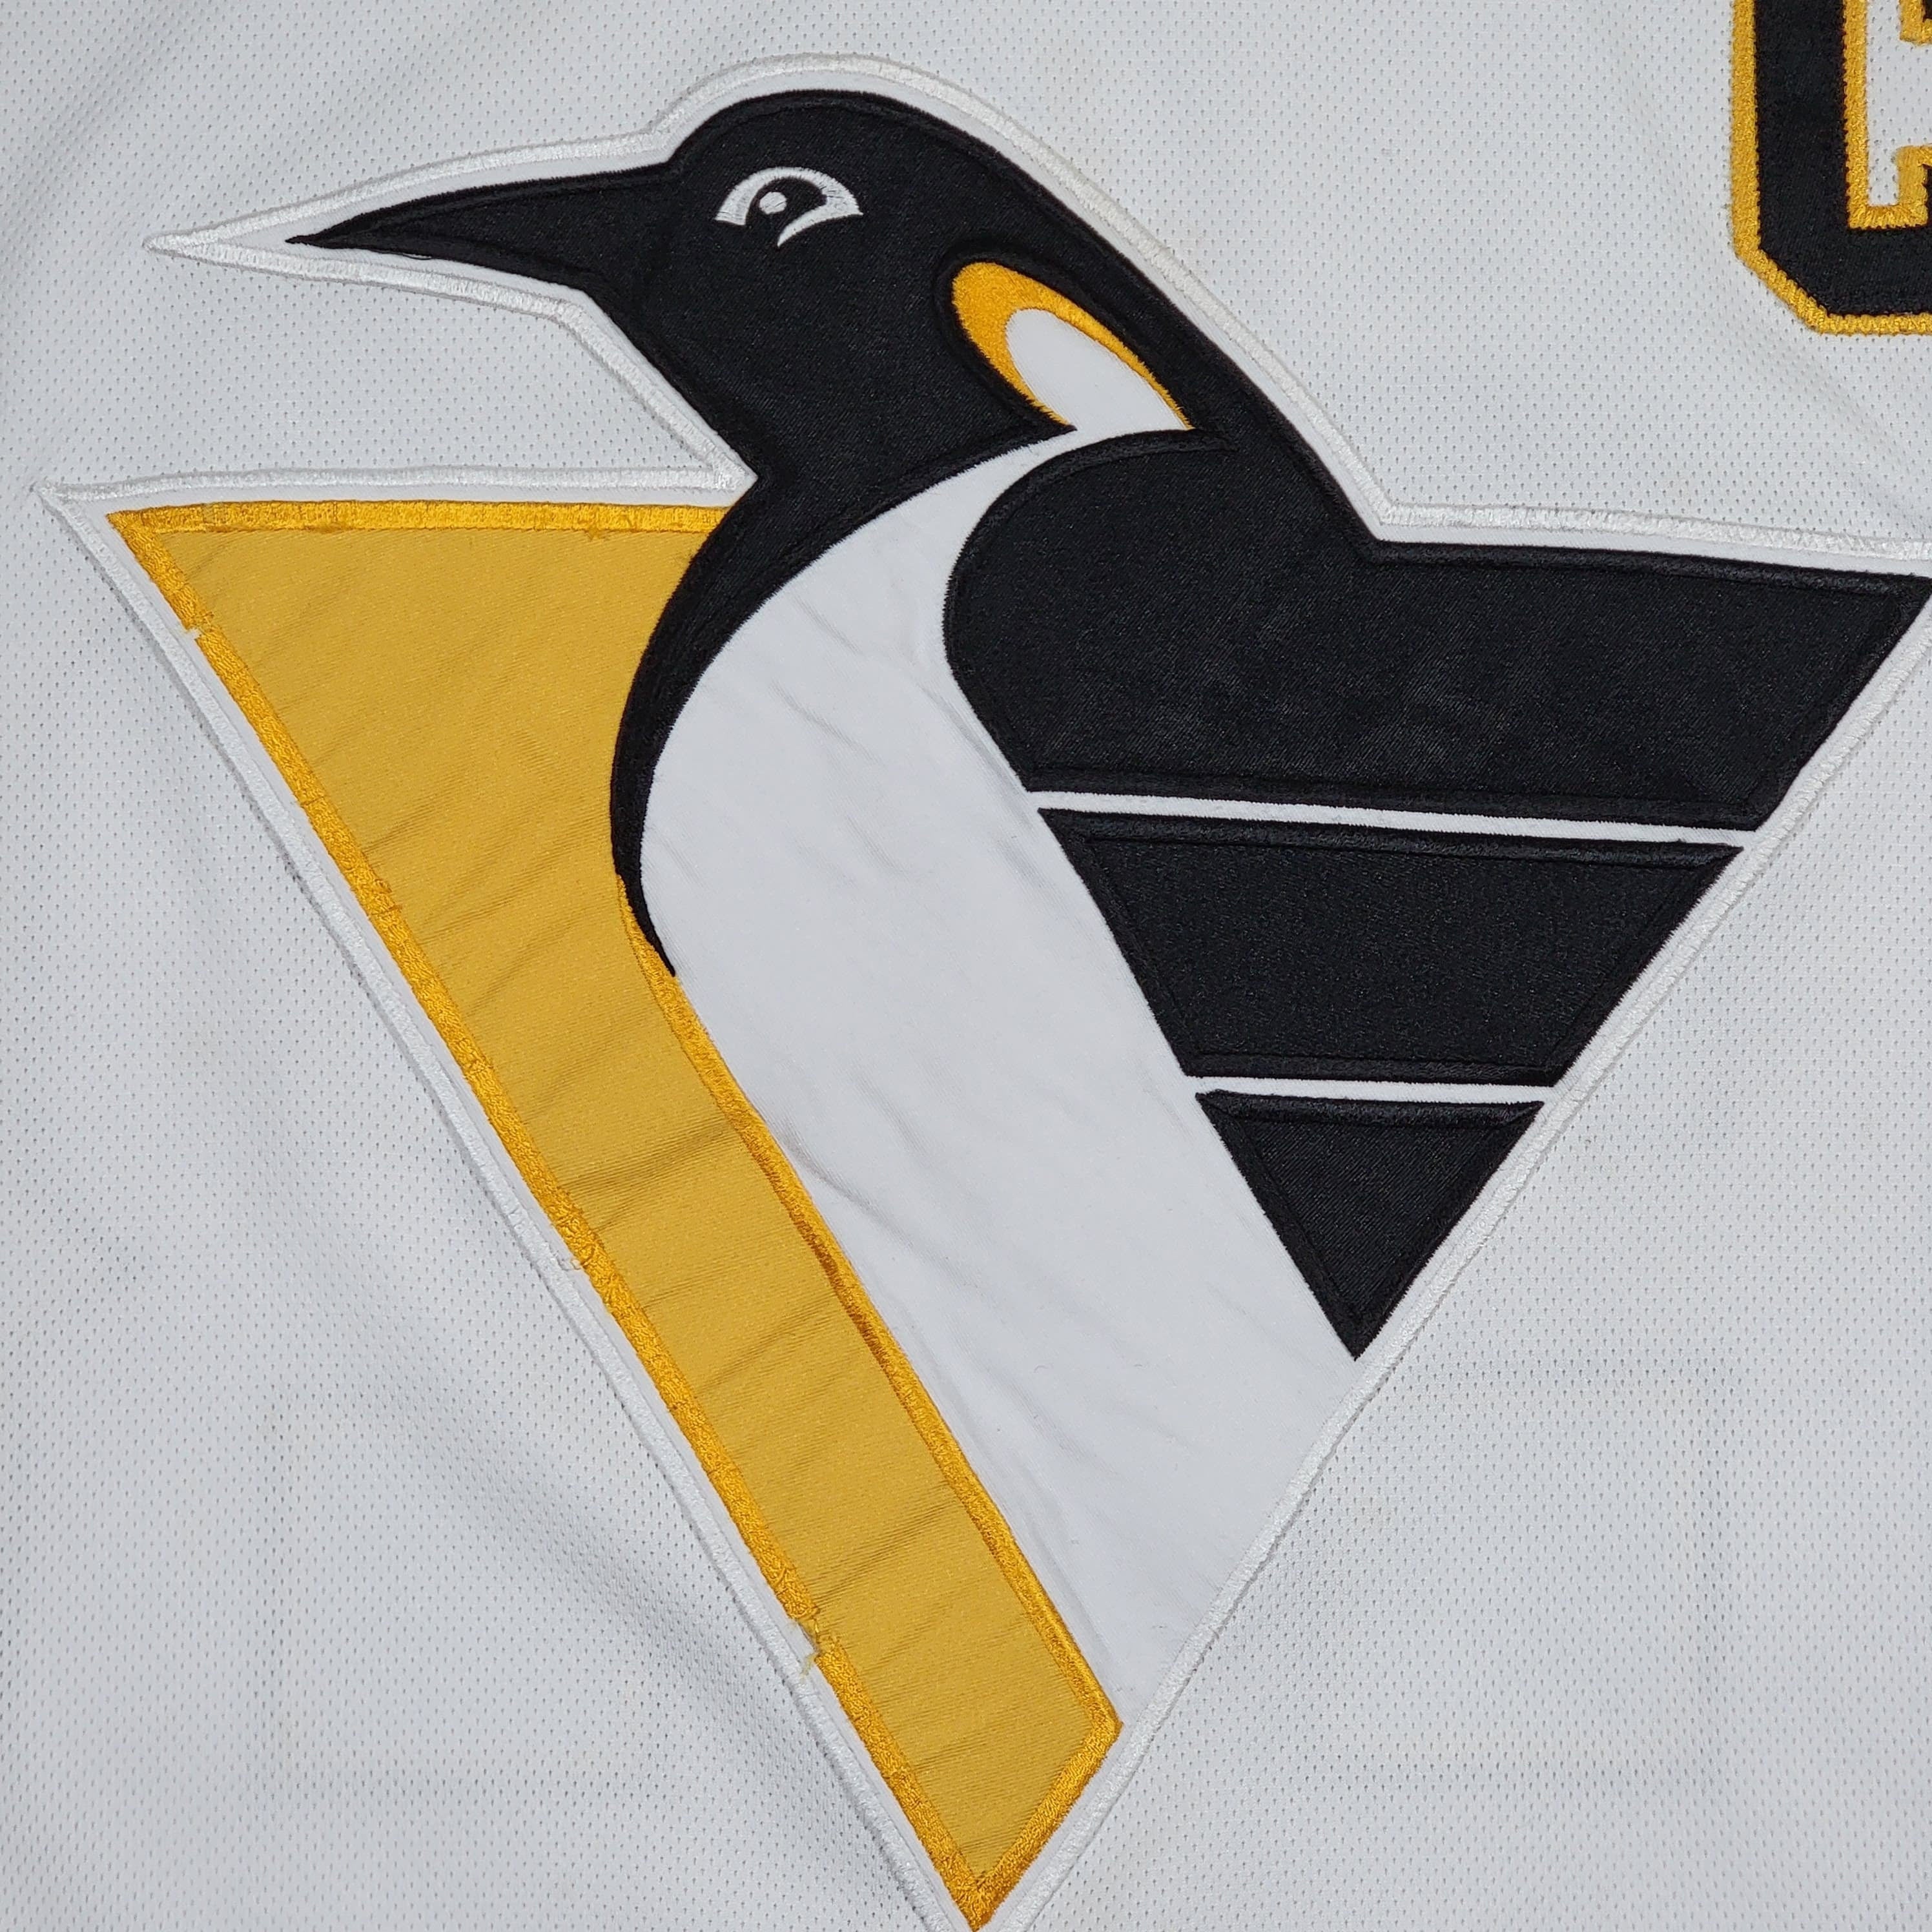 Pittsburgh Penguins Jaromir Jagr Authentic Starter Hockey Jersey Size Large